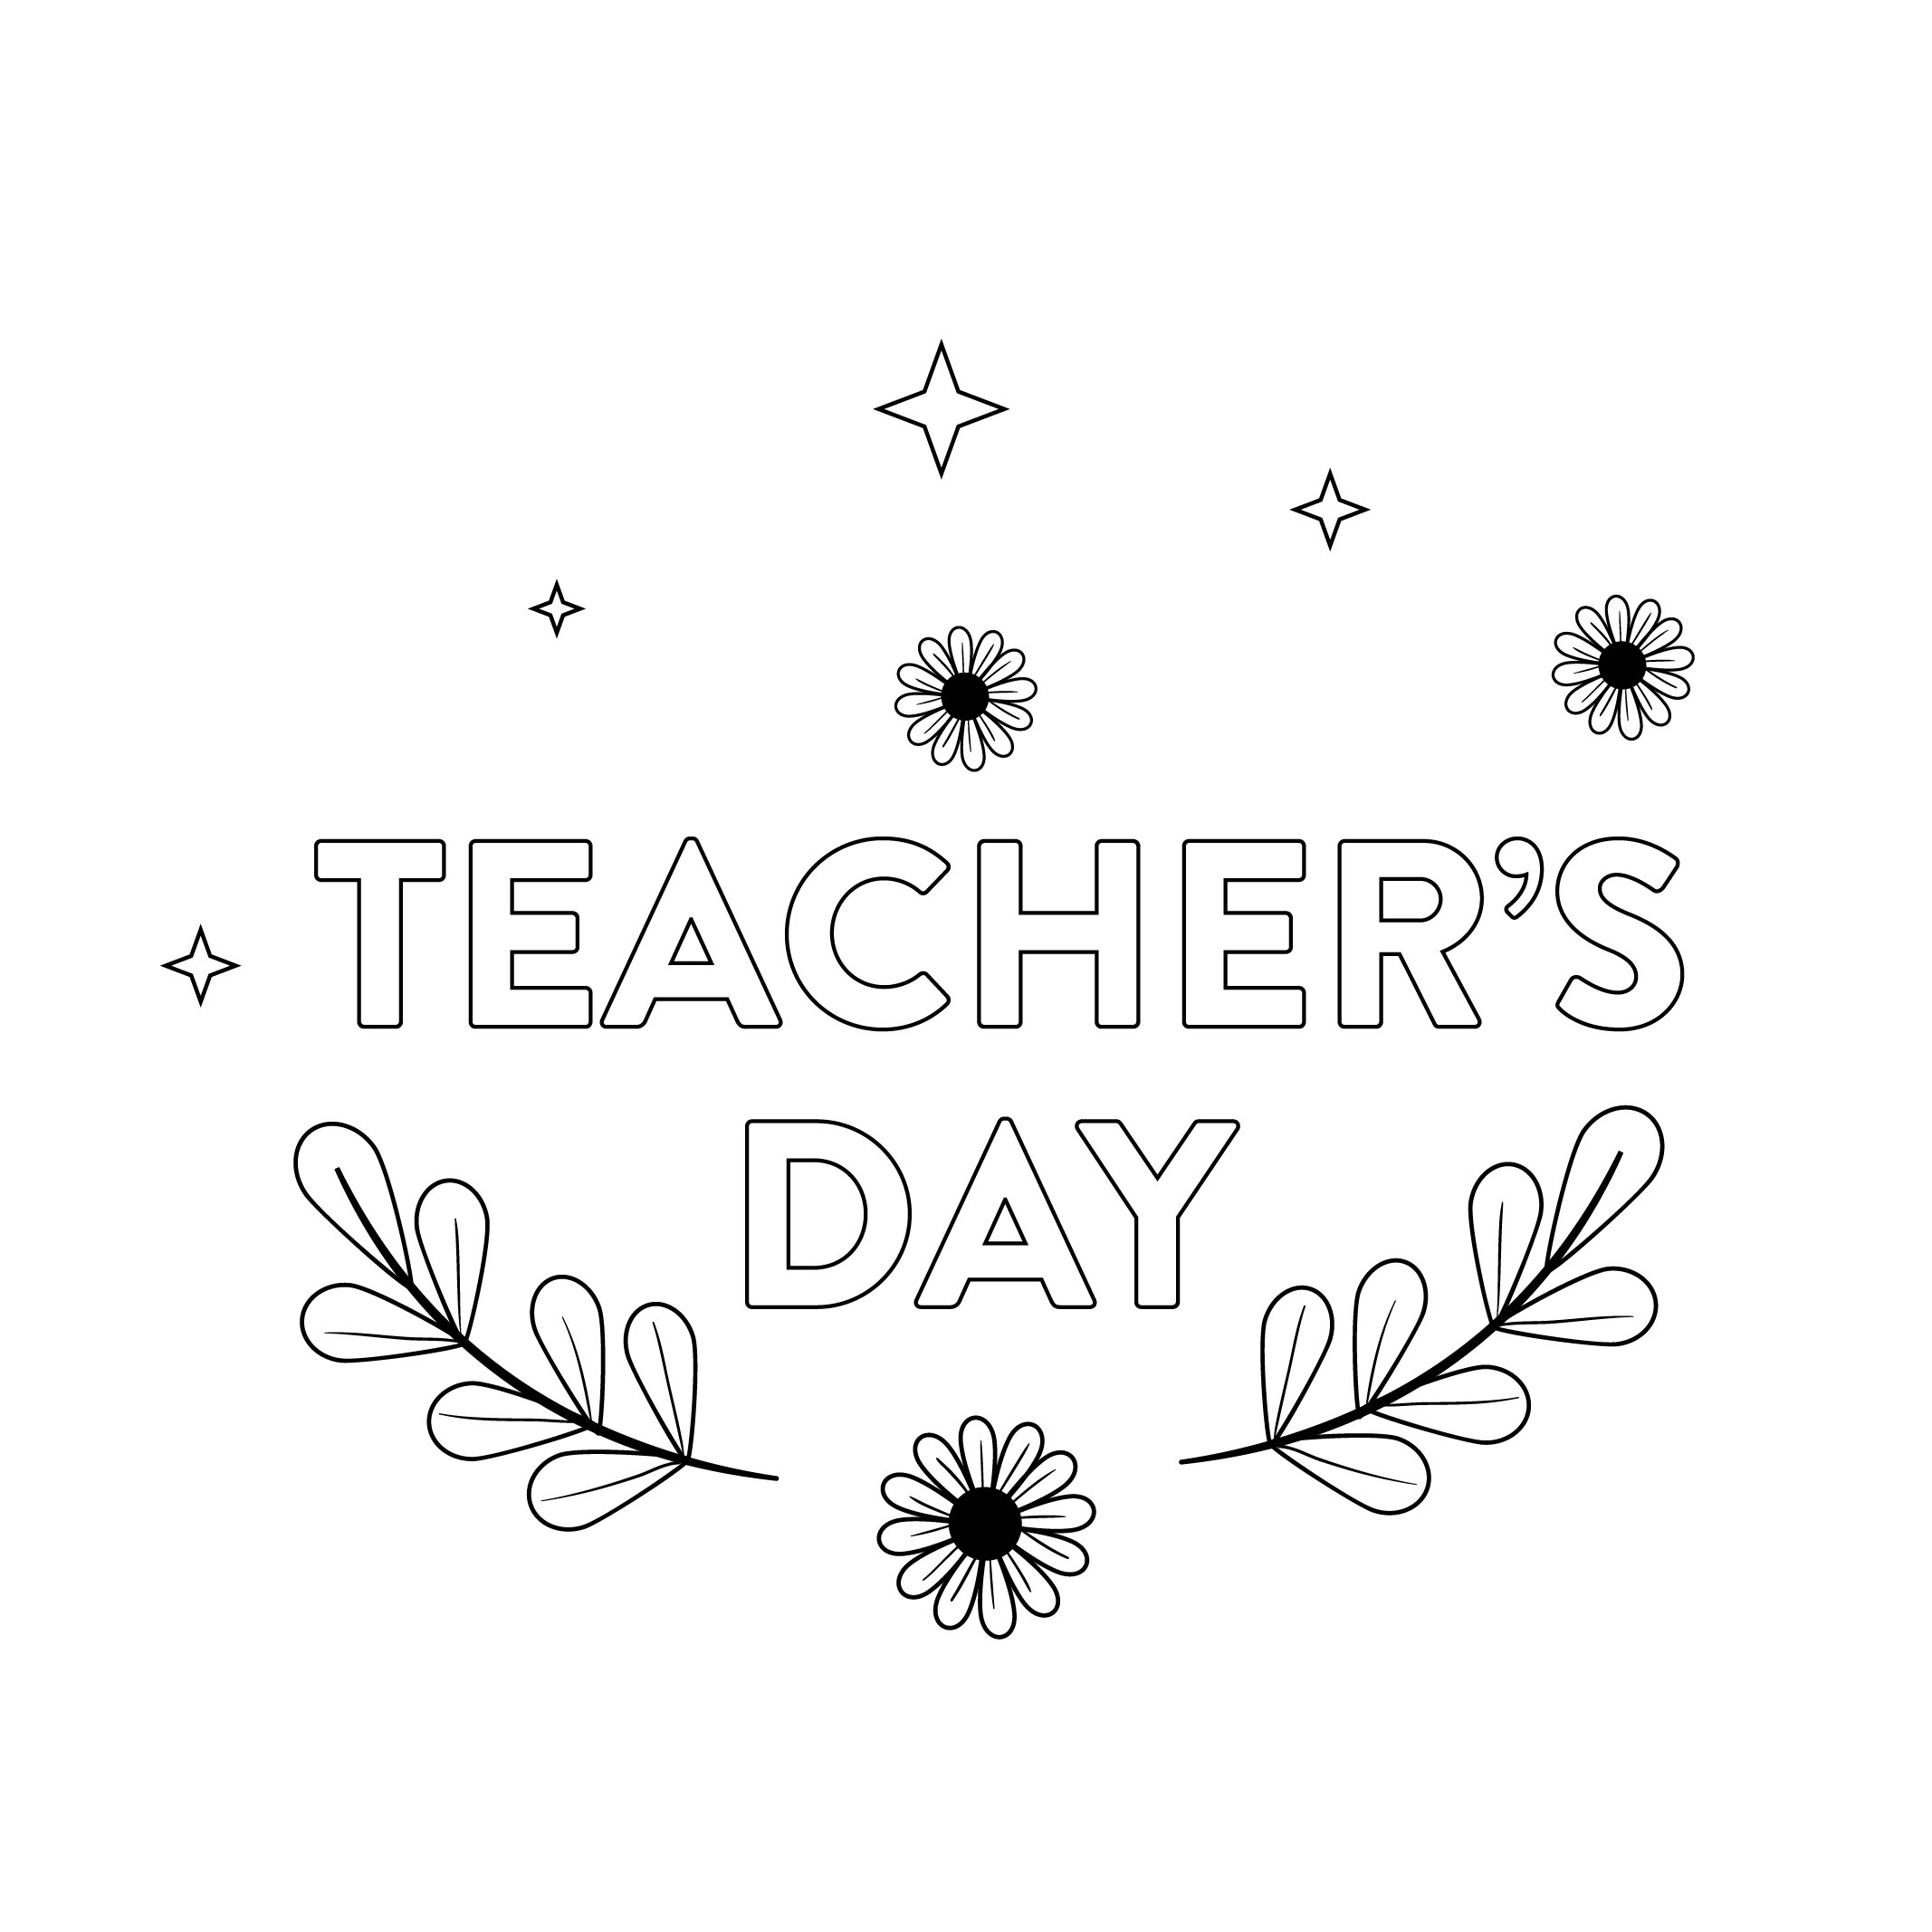 Happy teachers day stock illustration. Illustration of happy - 43849079